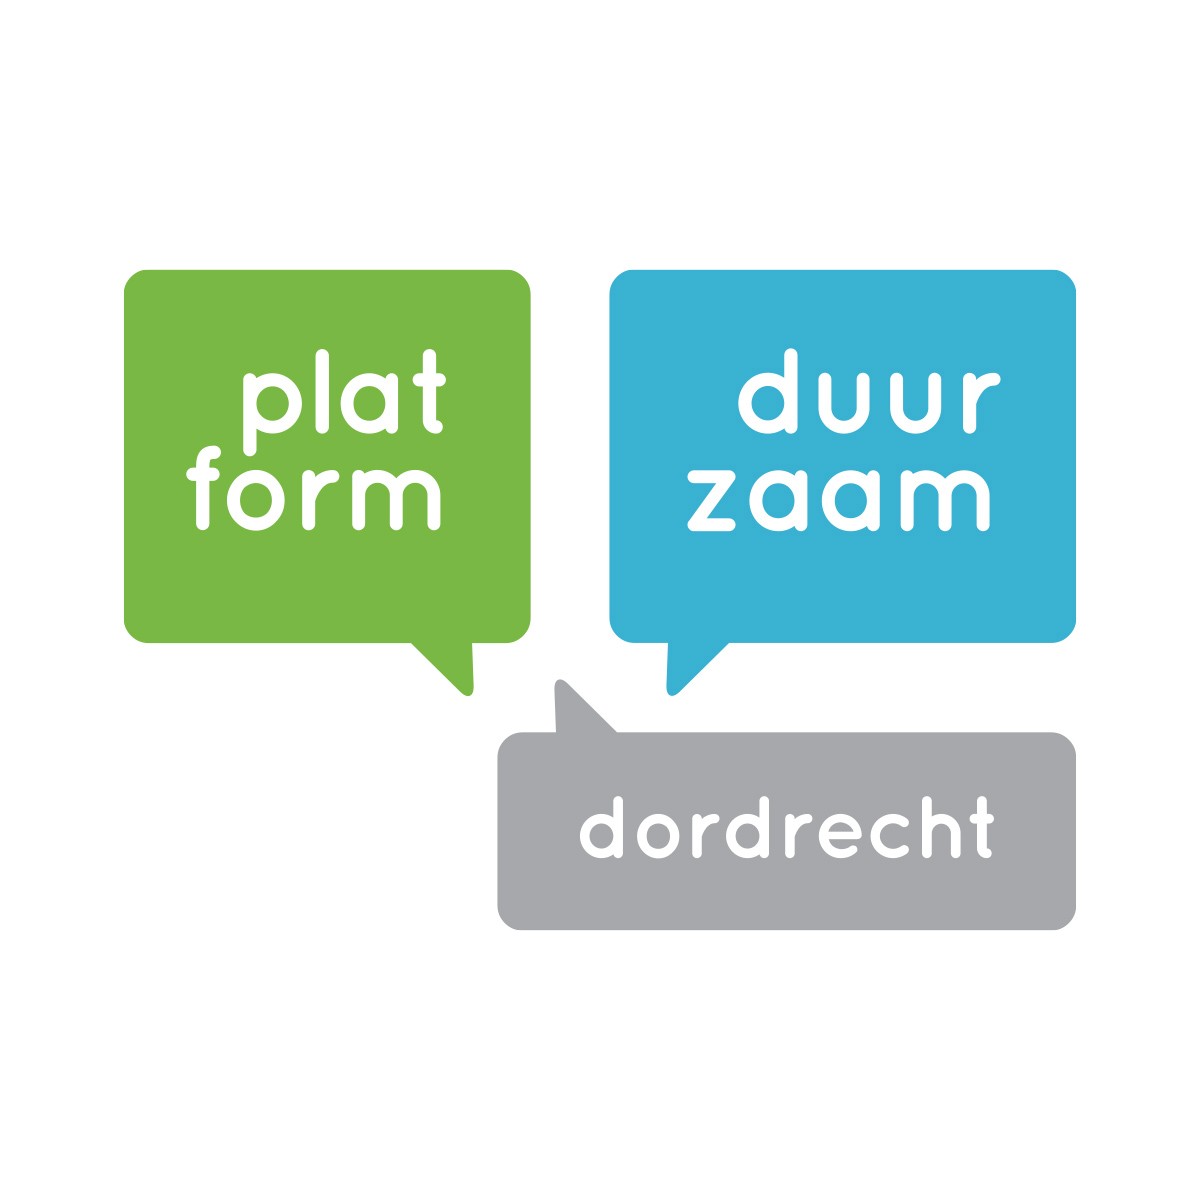 (c) Platformduurzaamdordrecht.nl